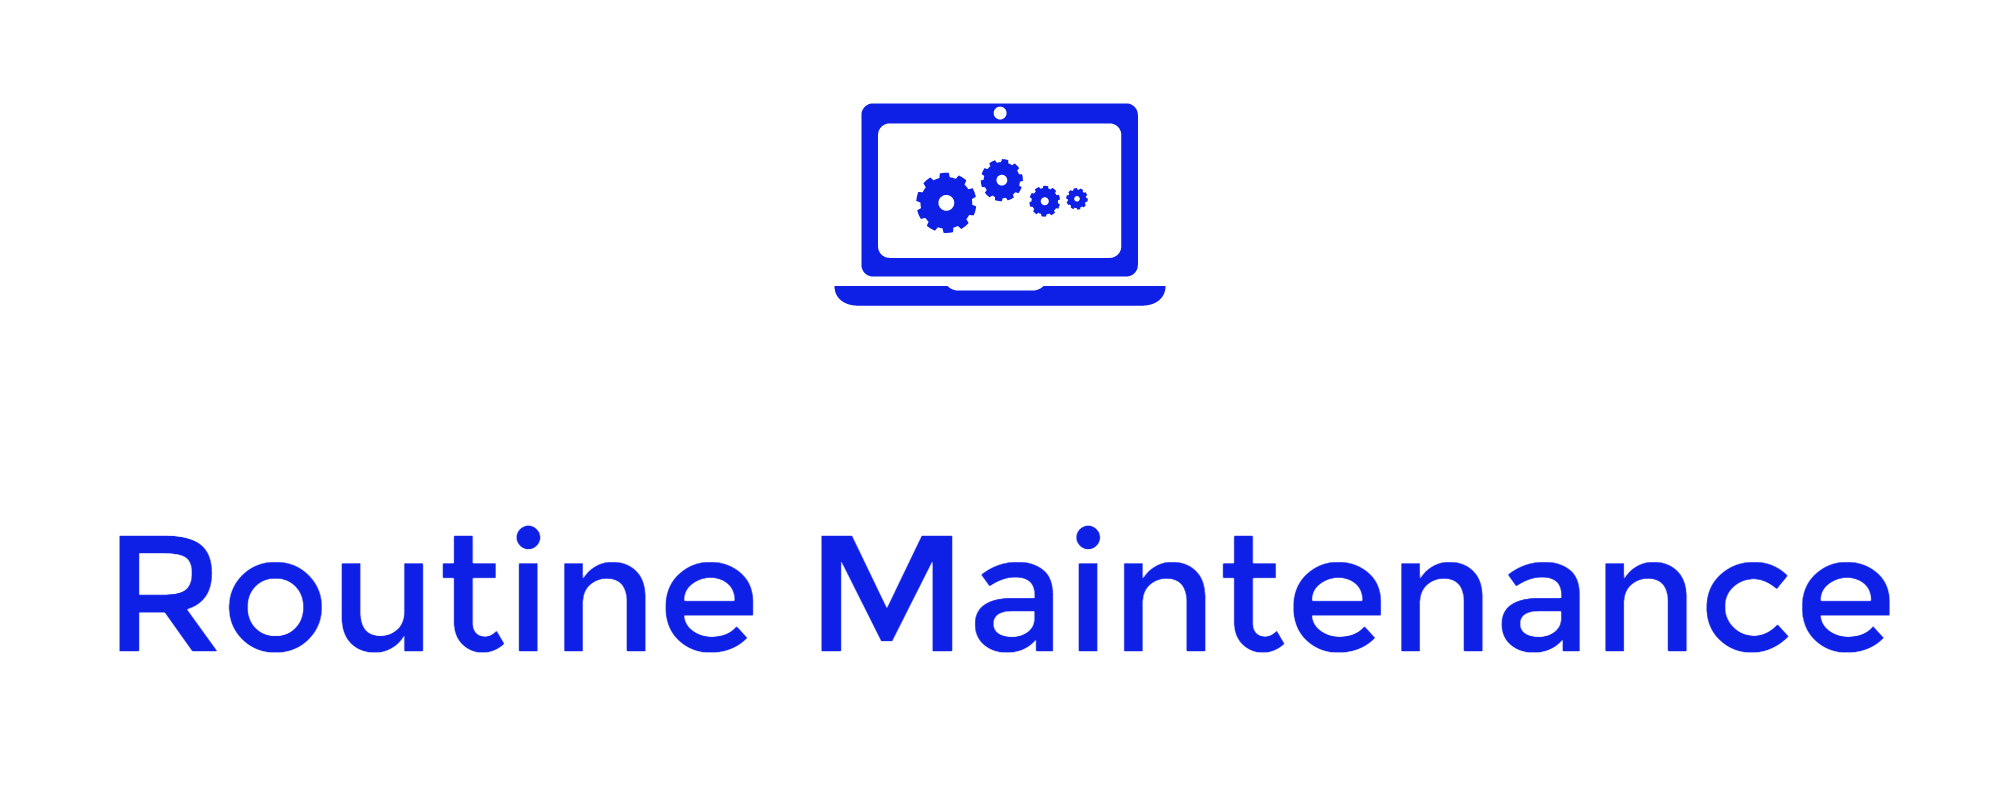 Routine Maintenance-logo.png